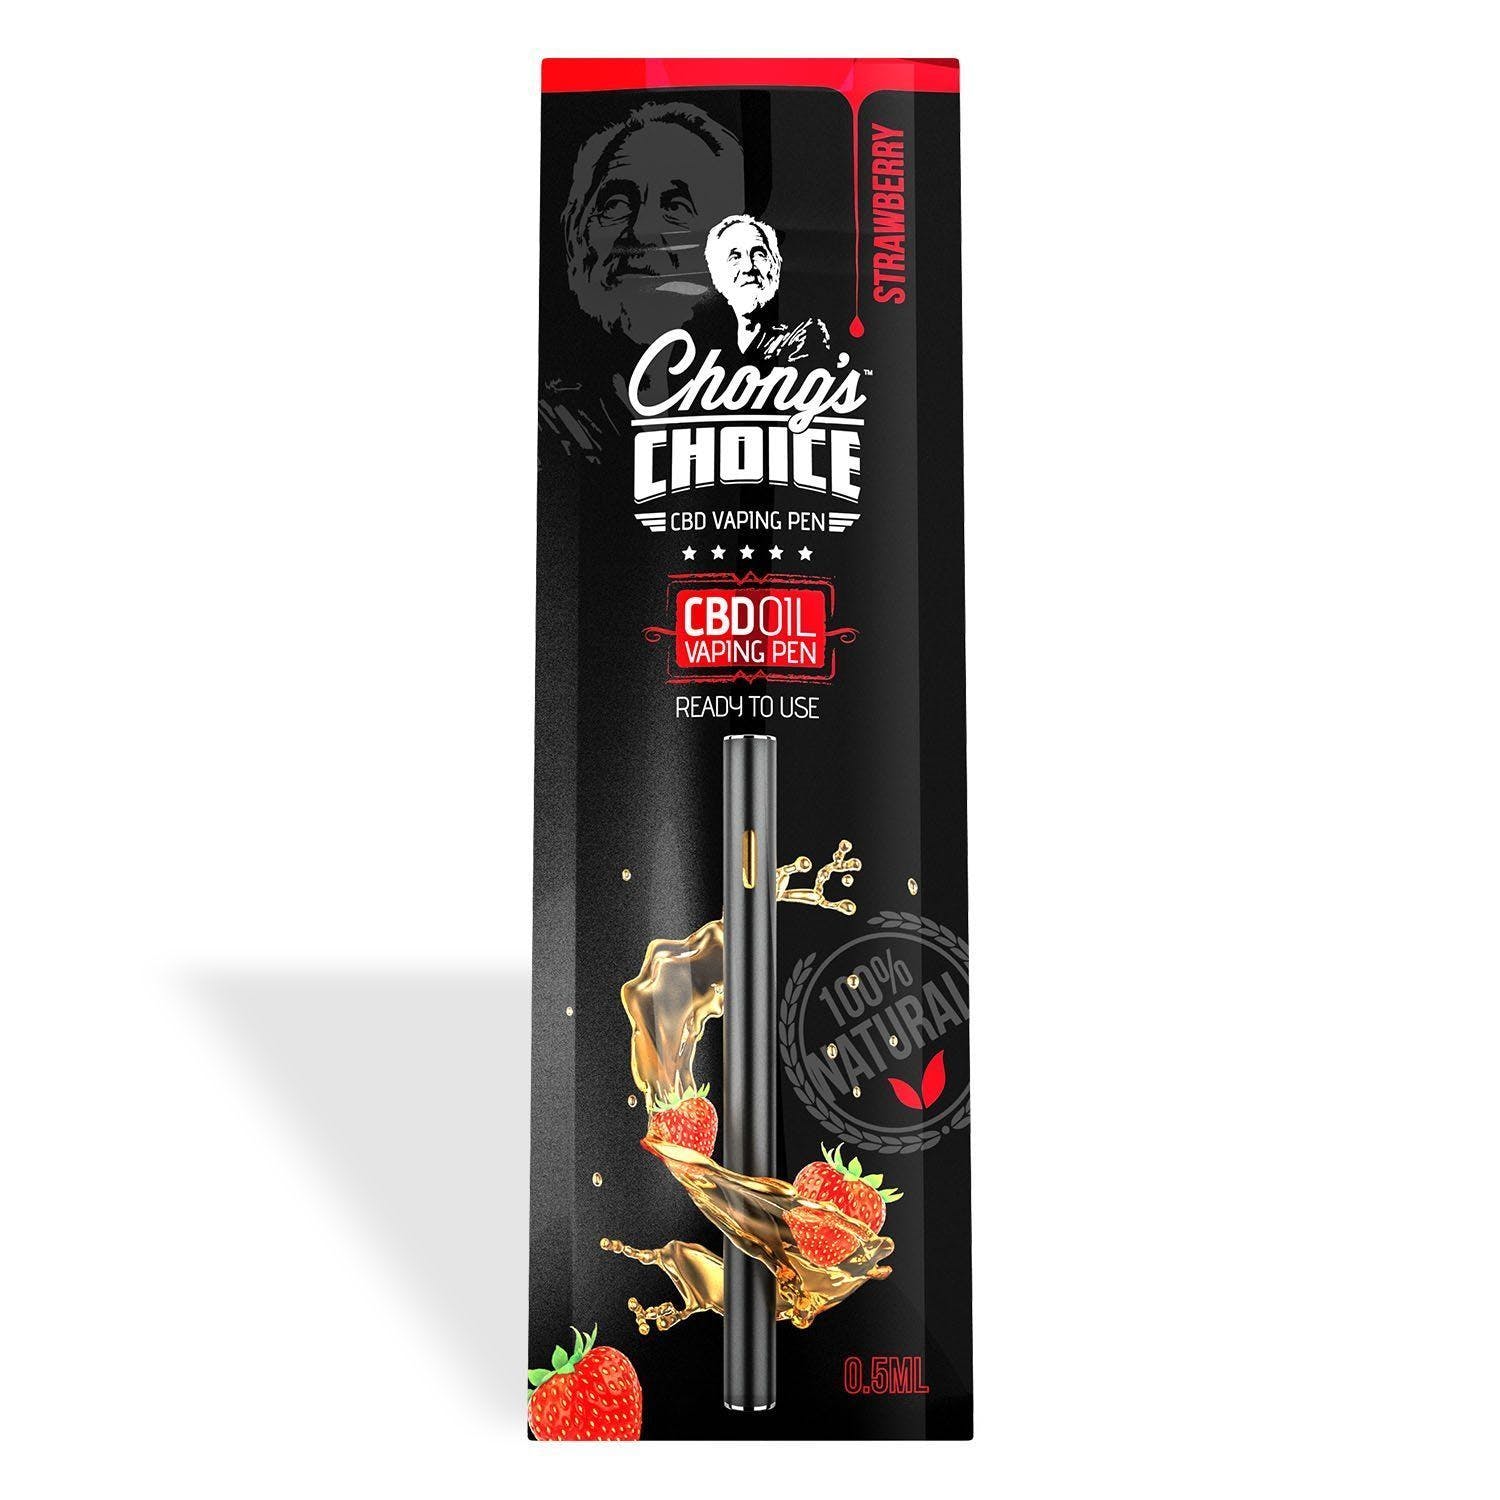 Chong's Choice CBD [Vaping Pen] - Strawberry